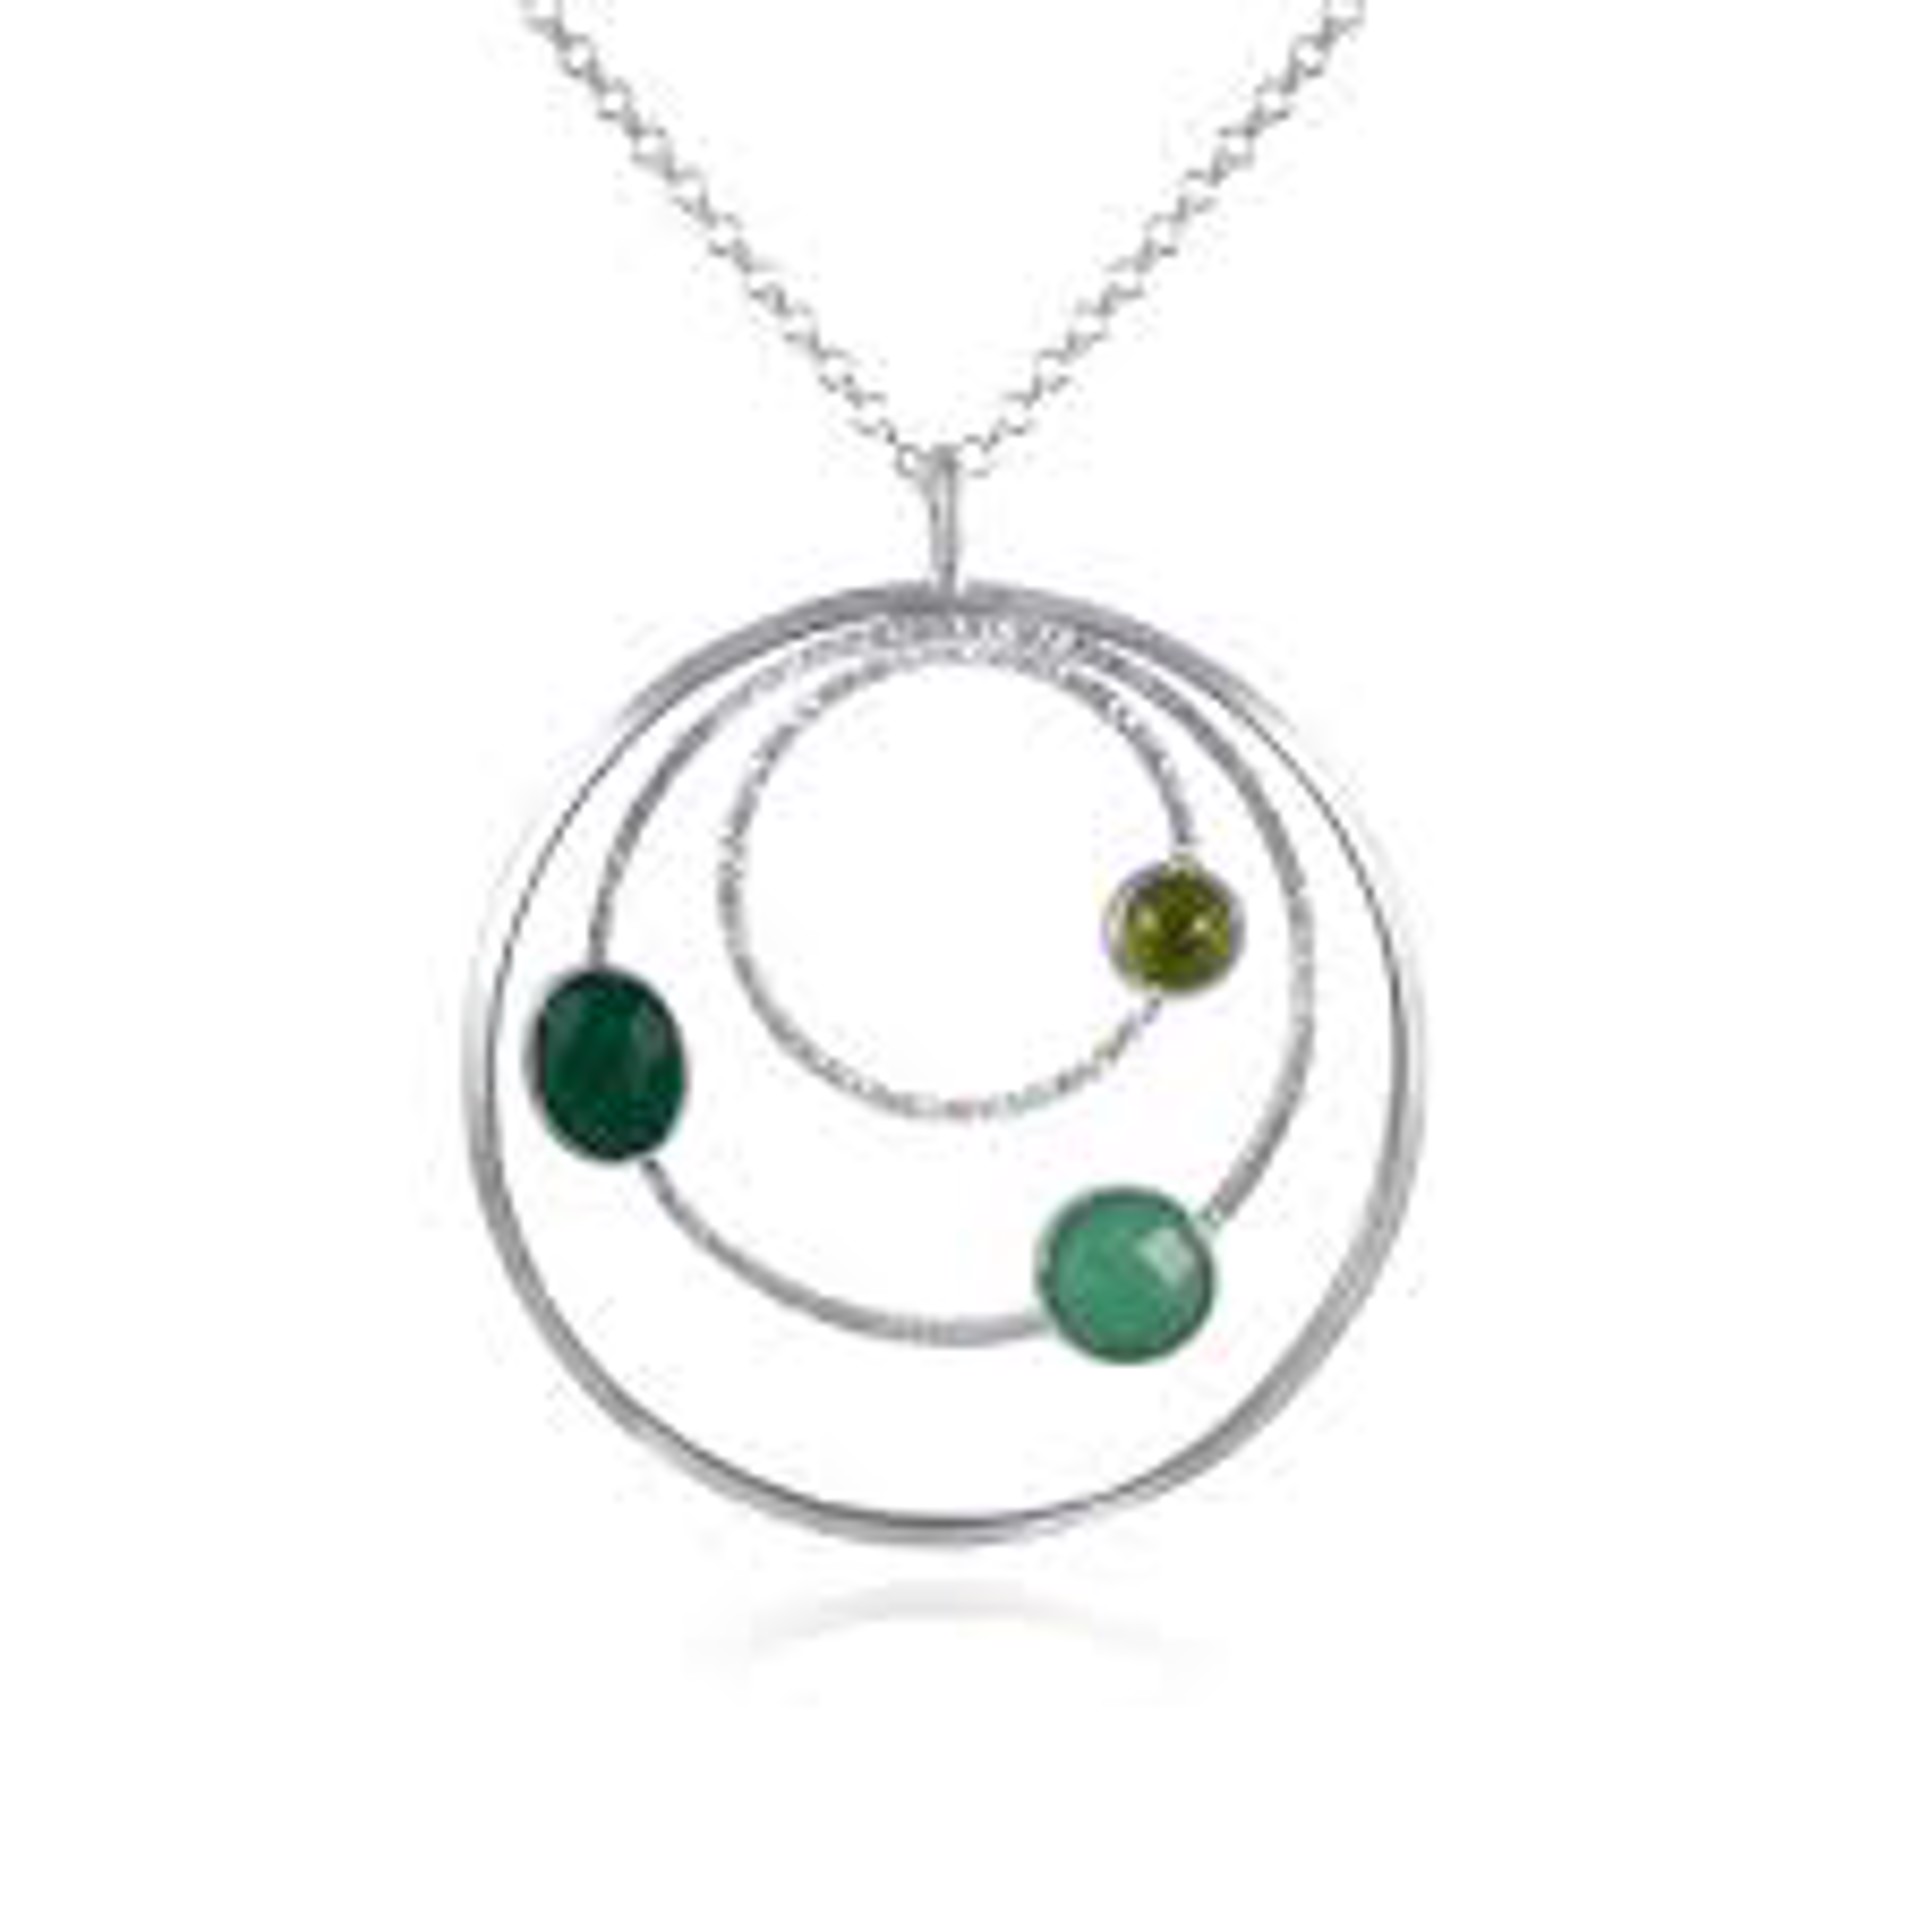 Orbit Necklace- Assorted Colors by Kristen Baird